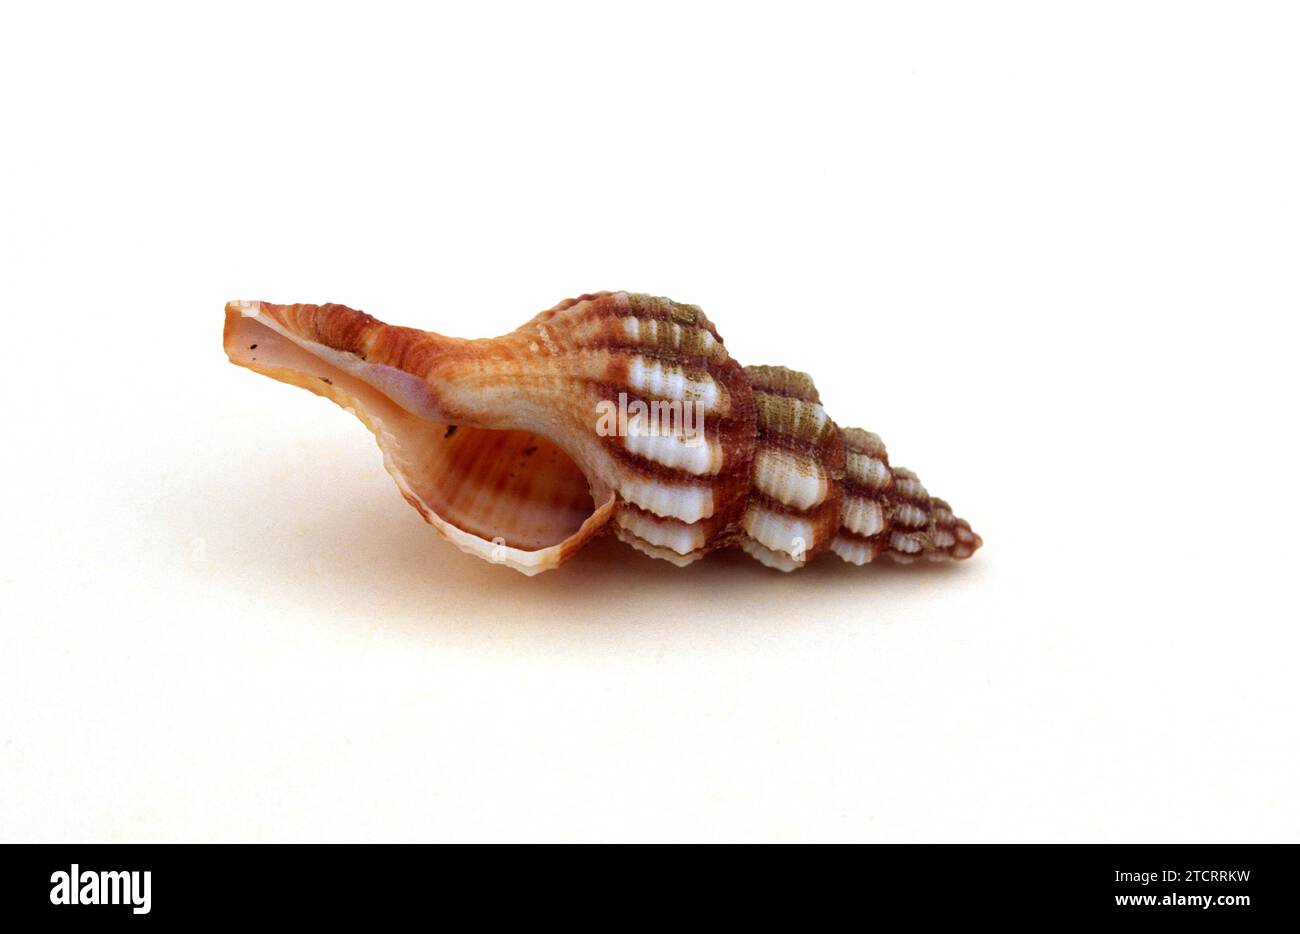 Syracusan spindle shell (Fusinus syracusanus) is a marine snail native to Mediterranean Sea. Stock Photo